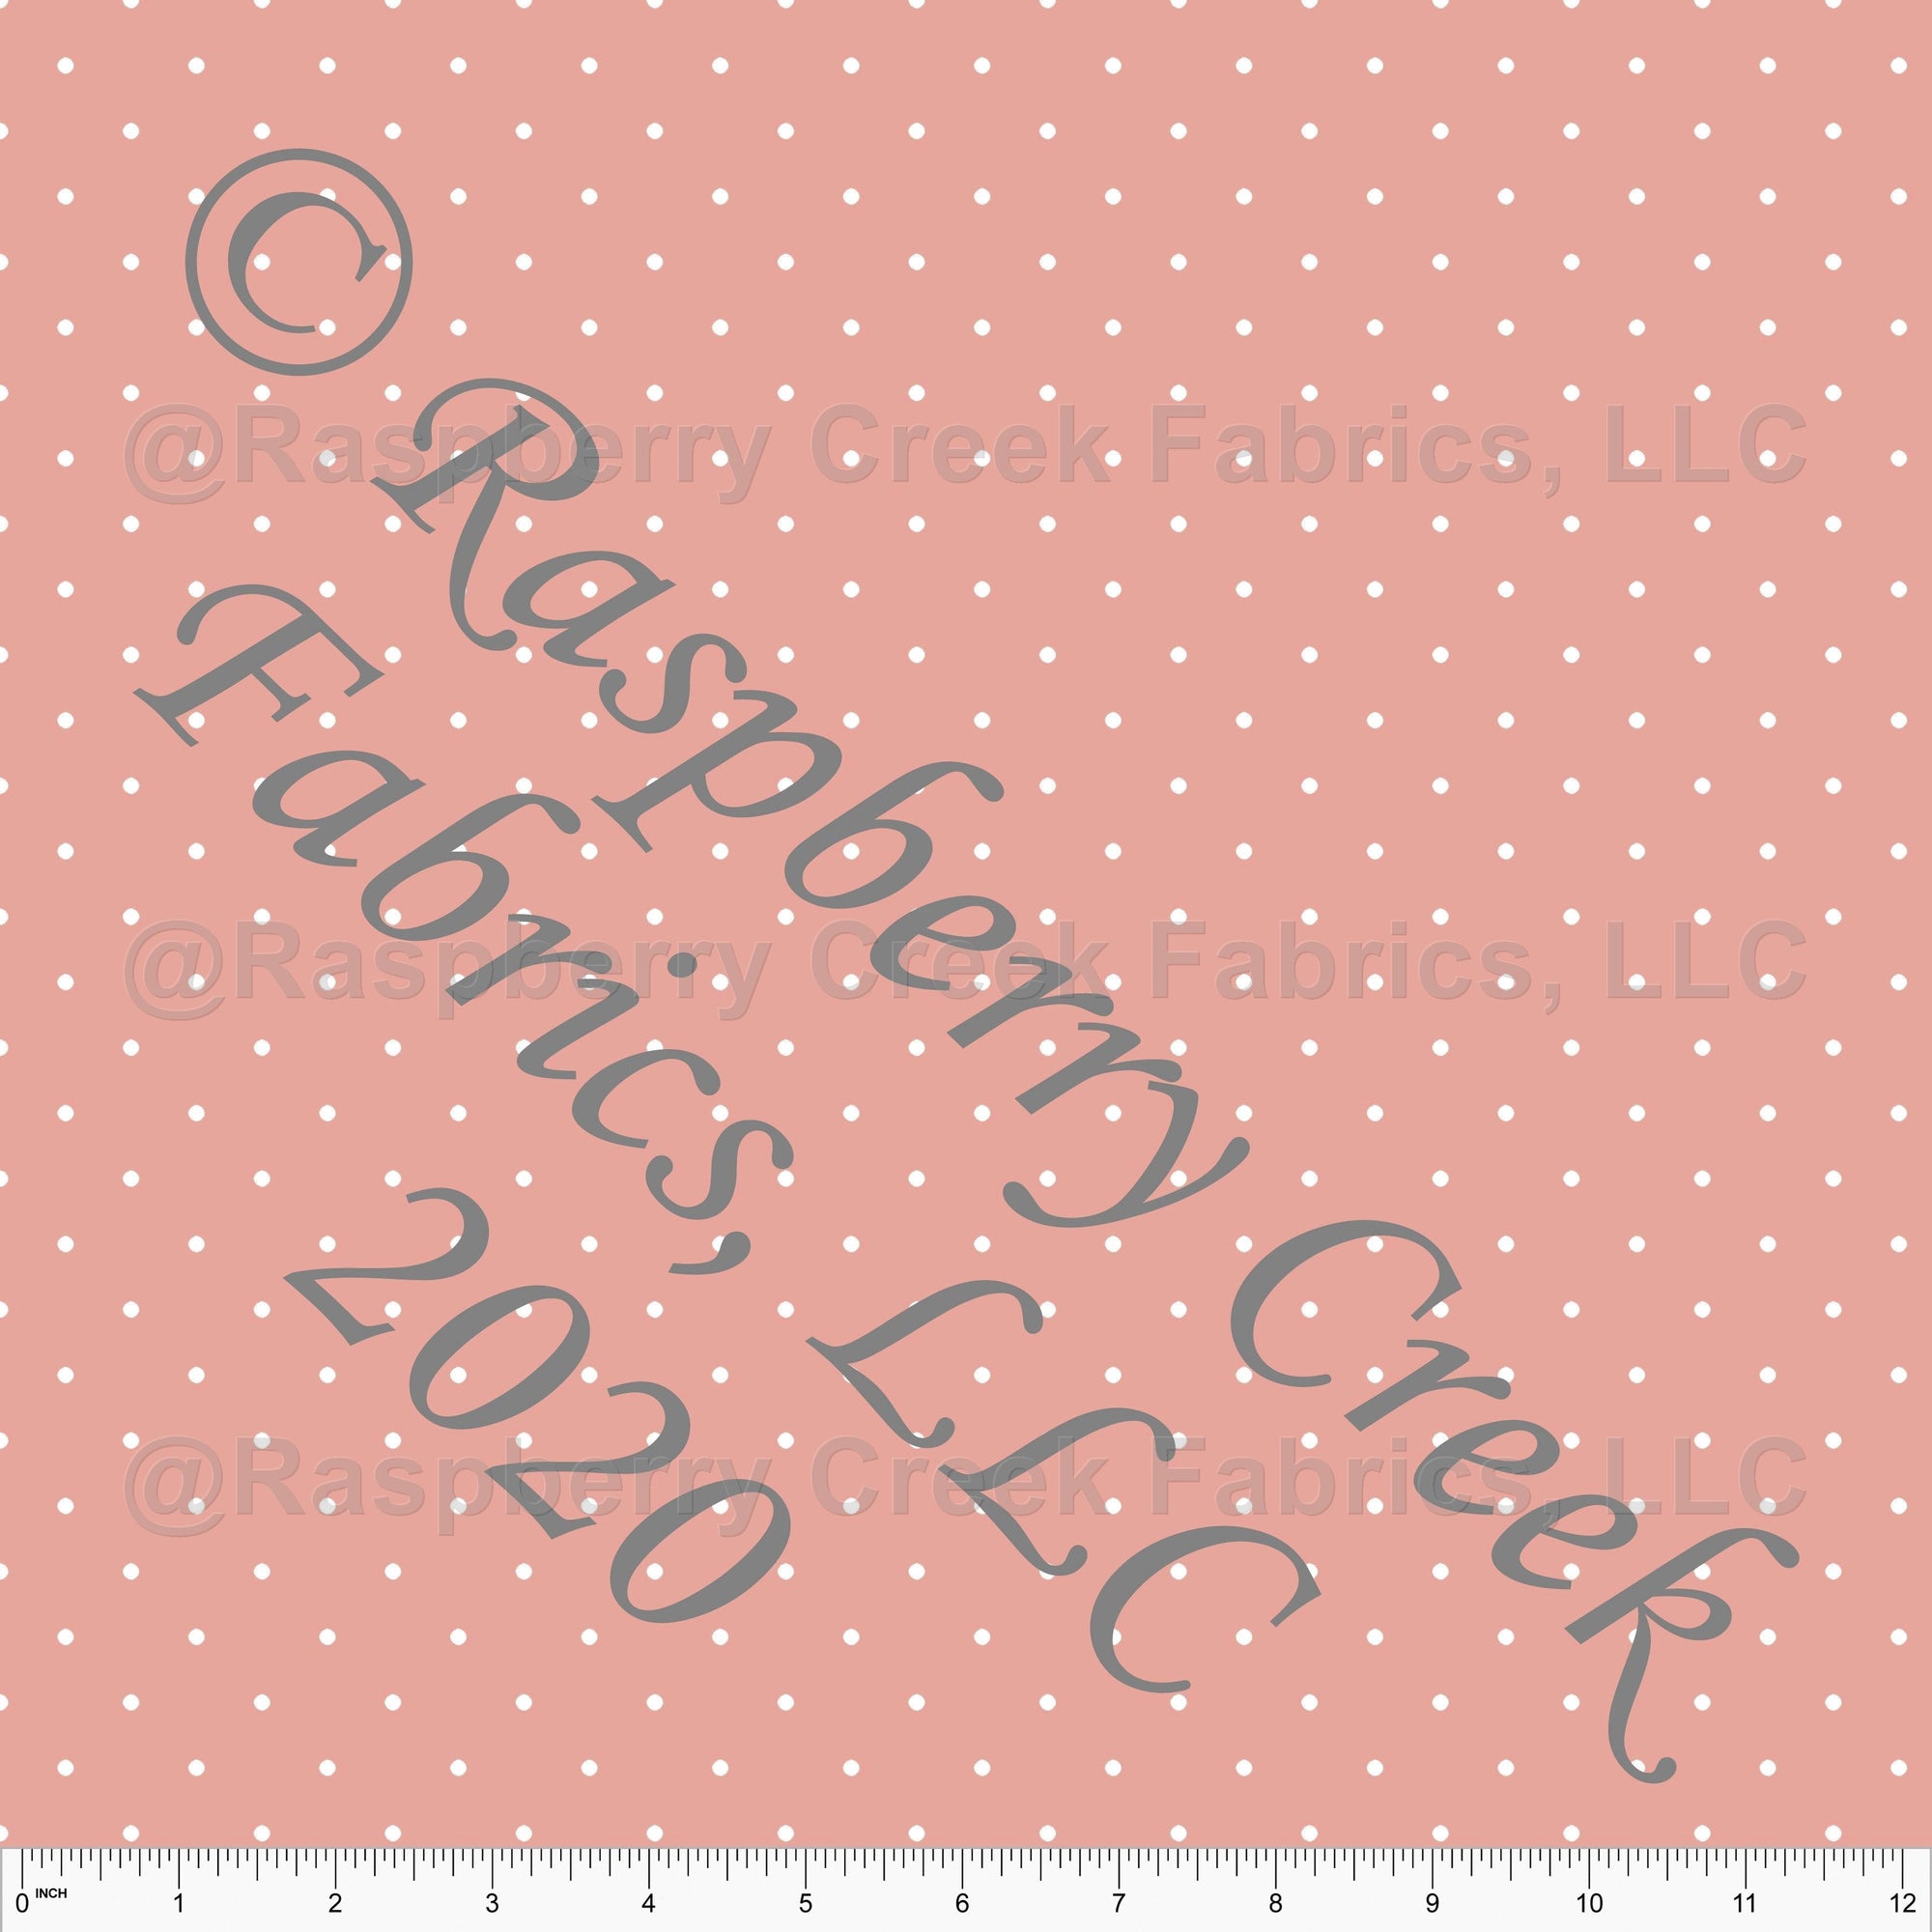 Dusty Pink and White Pin Dot, Basics for CLUB Fabrics Fabric, Raspberry Creek Fabrics, watermarked